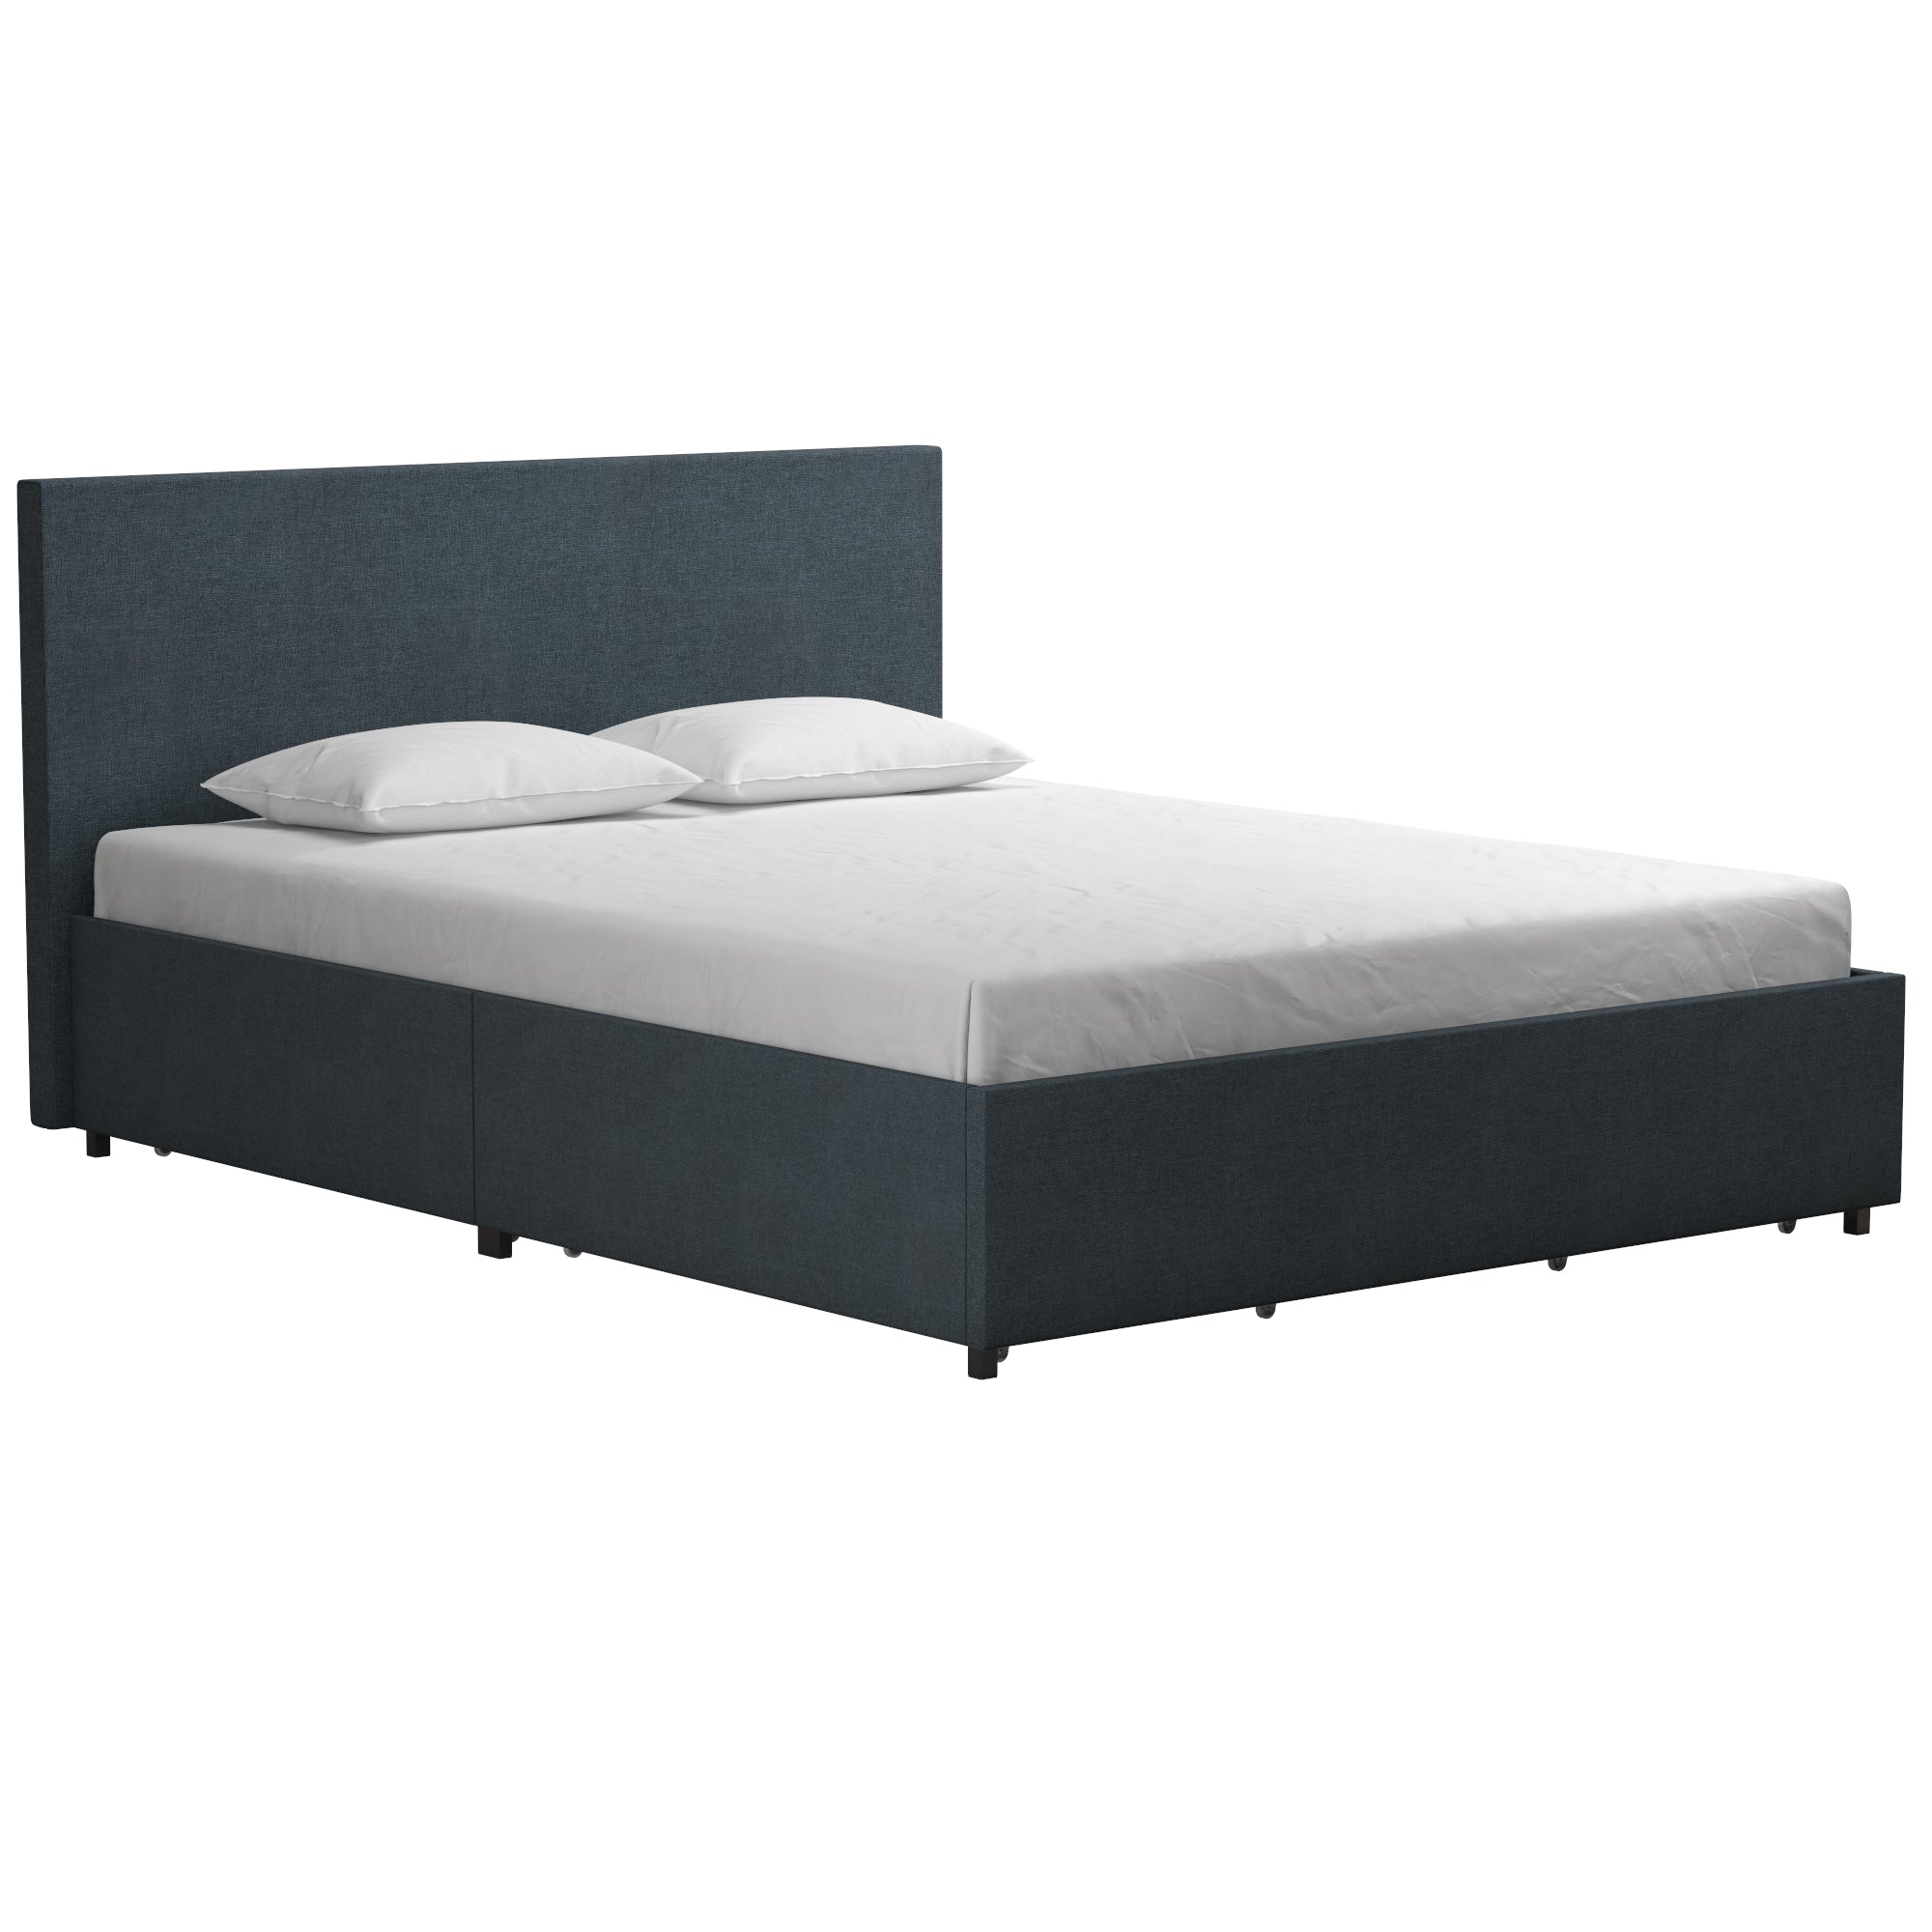 Kelly Upholstered Bed with Storage Drawers – The Novogratz